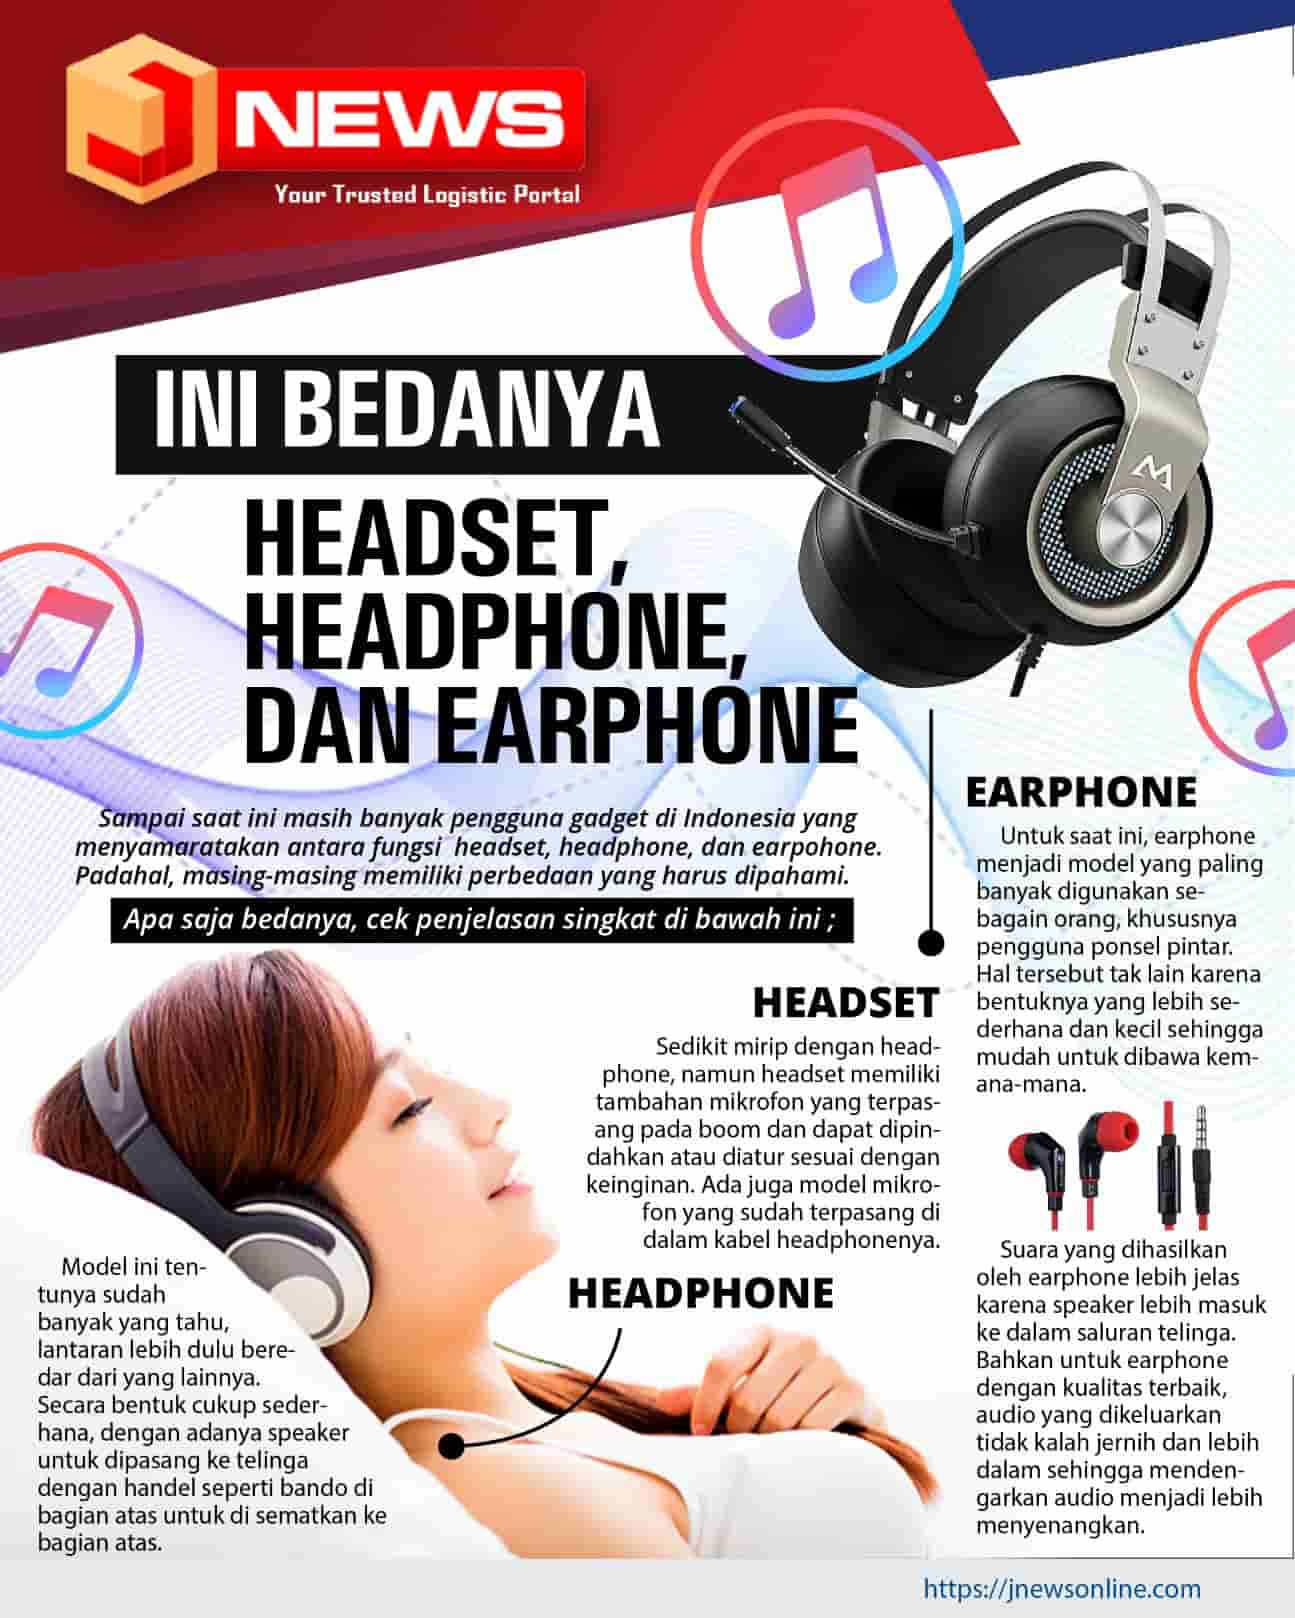 Perbedaan Headset, Headphone, dan Earphone